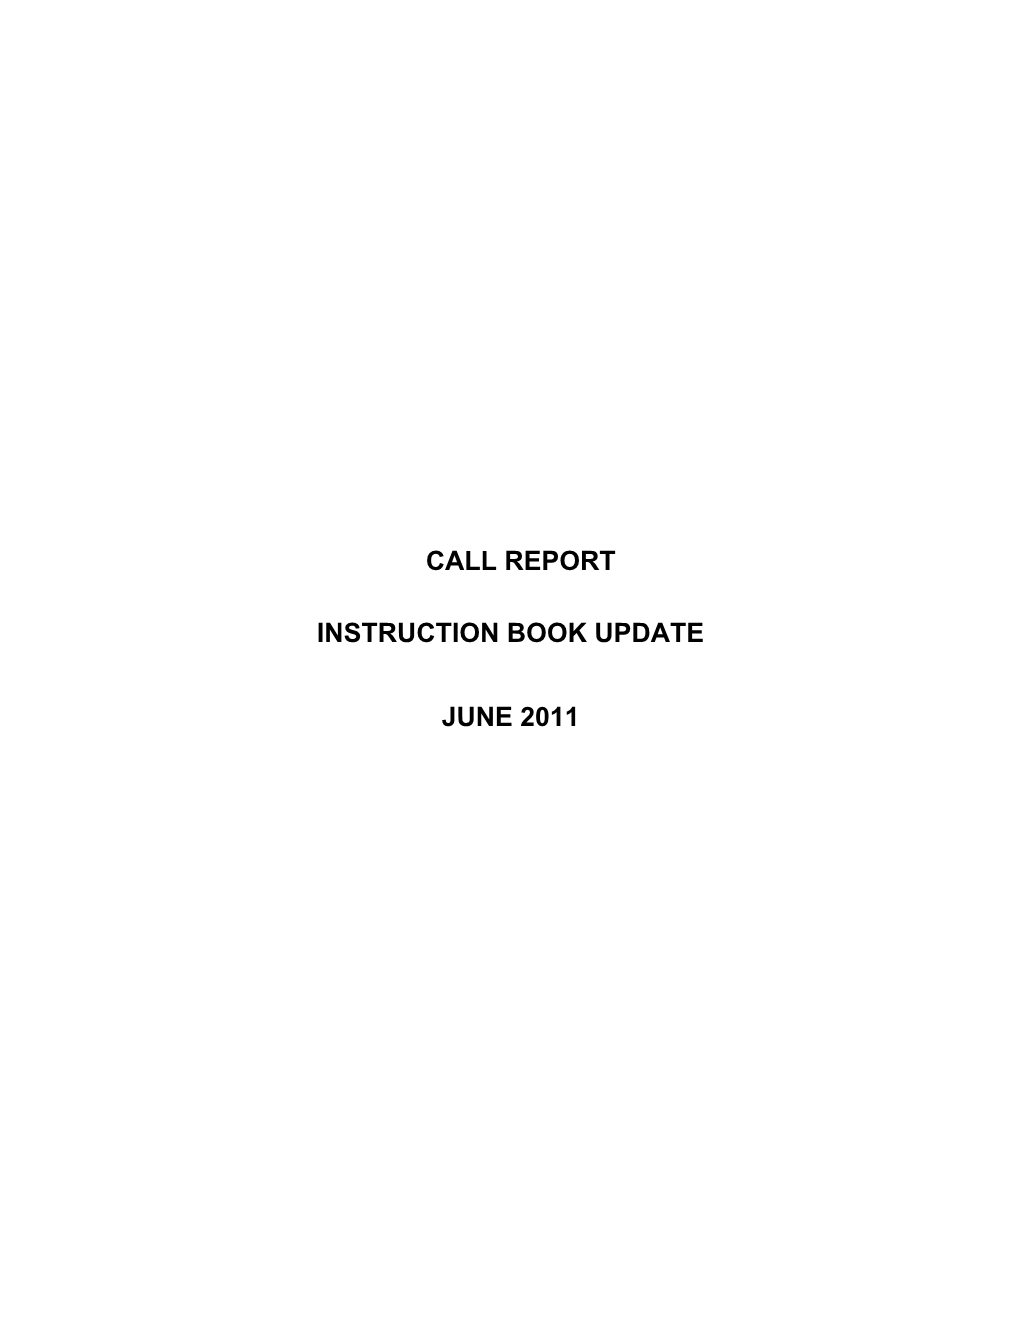 Call Report Instruction Book Update June 2011